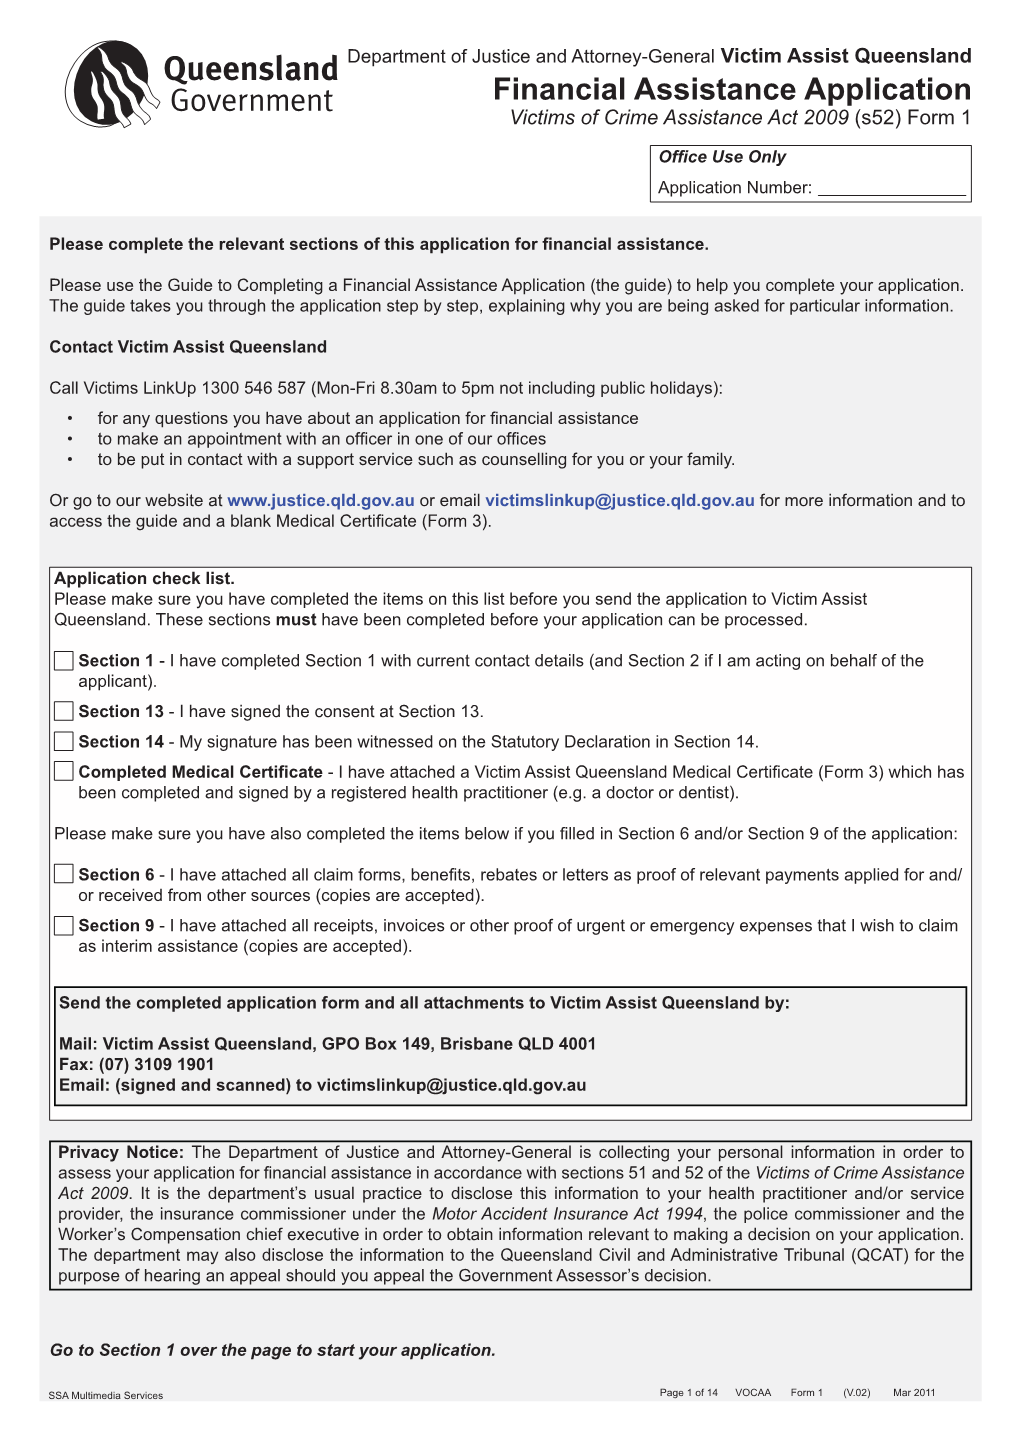 Form 1 – Financial Assistance Application Form Queensland